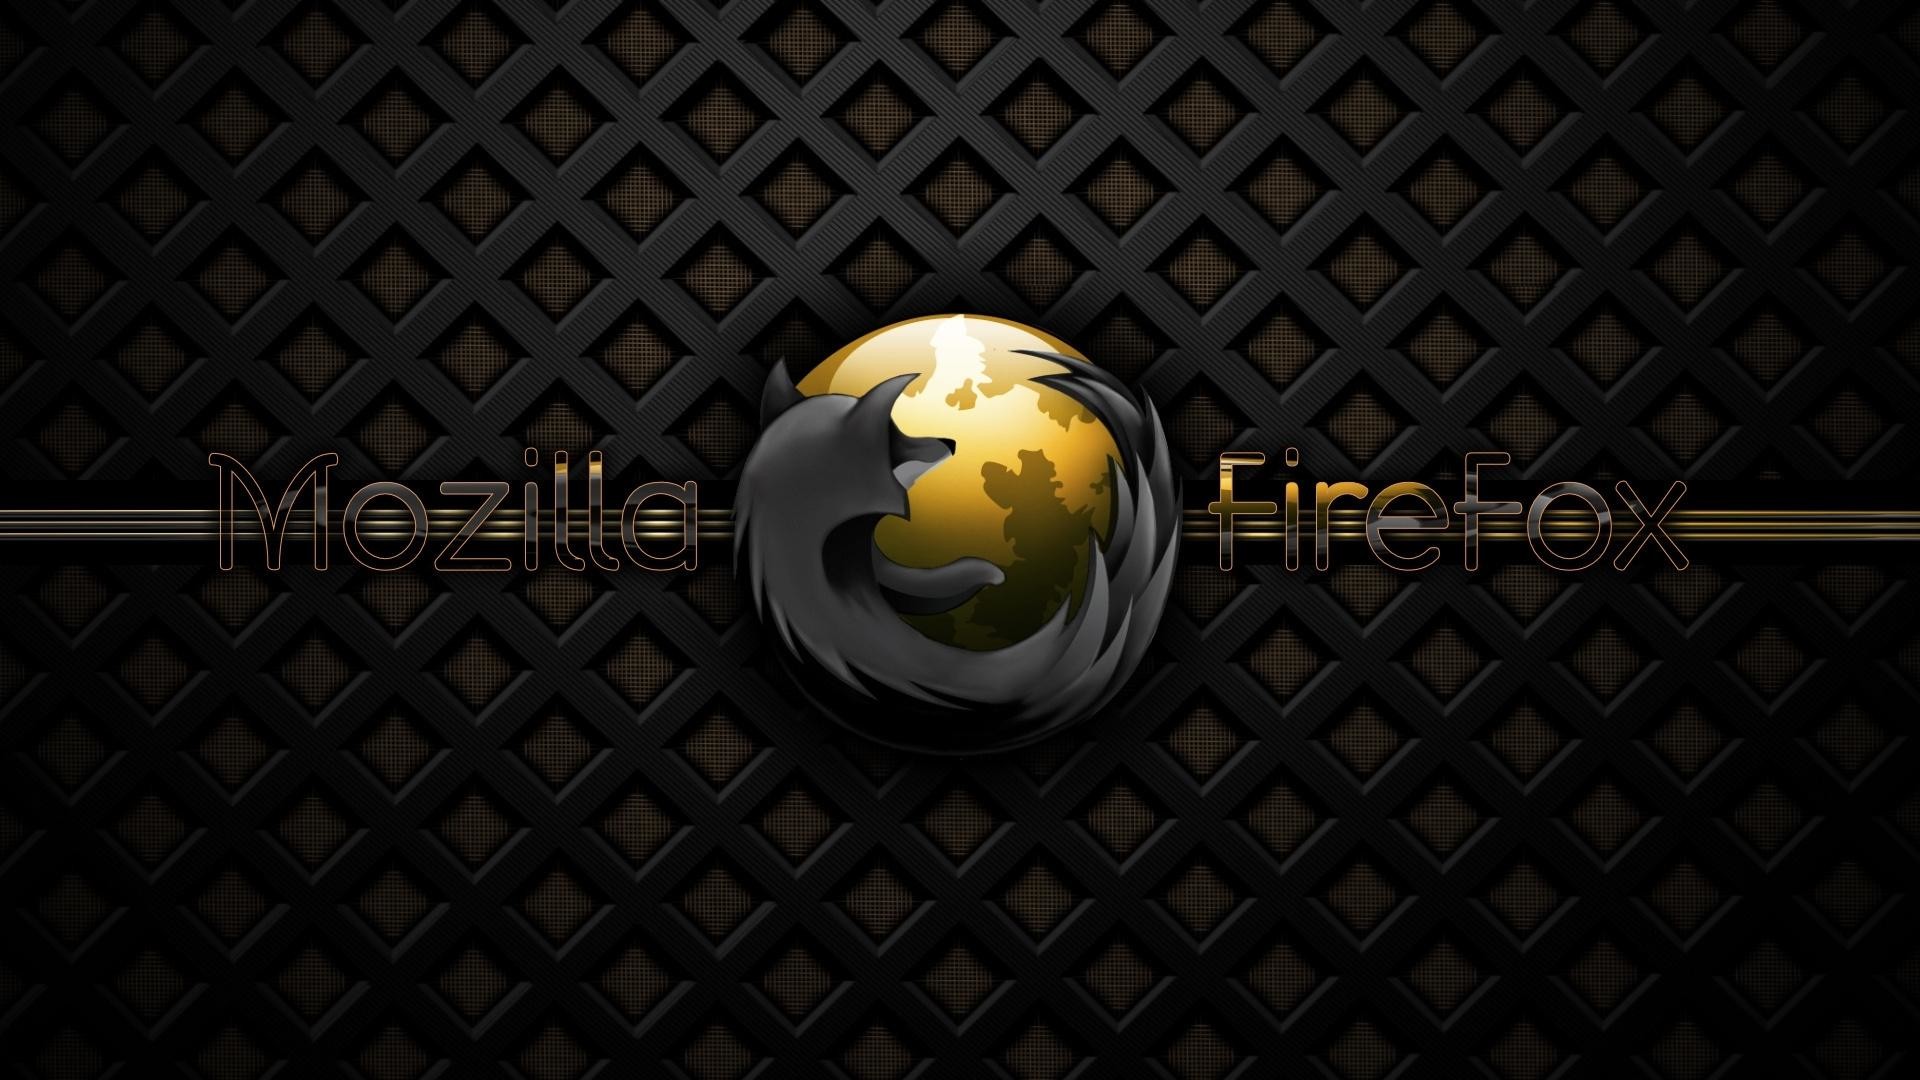 1920x1080 Mozilla Firefox logo